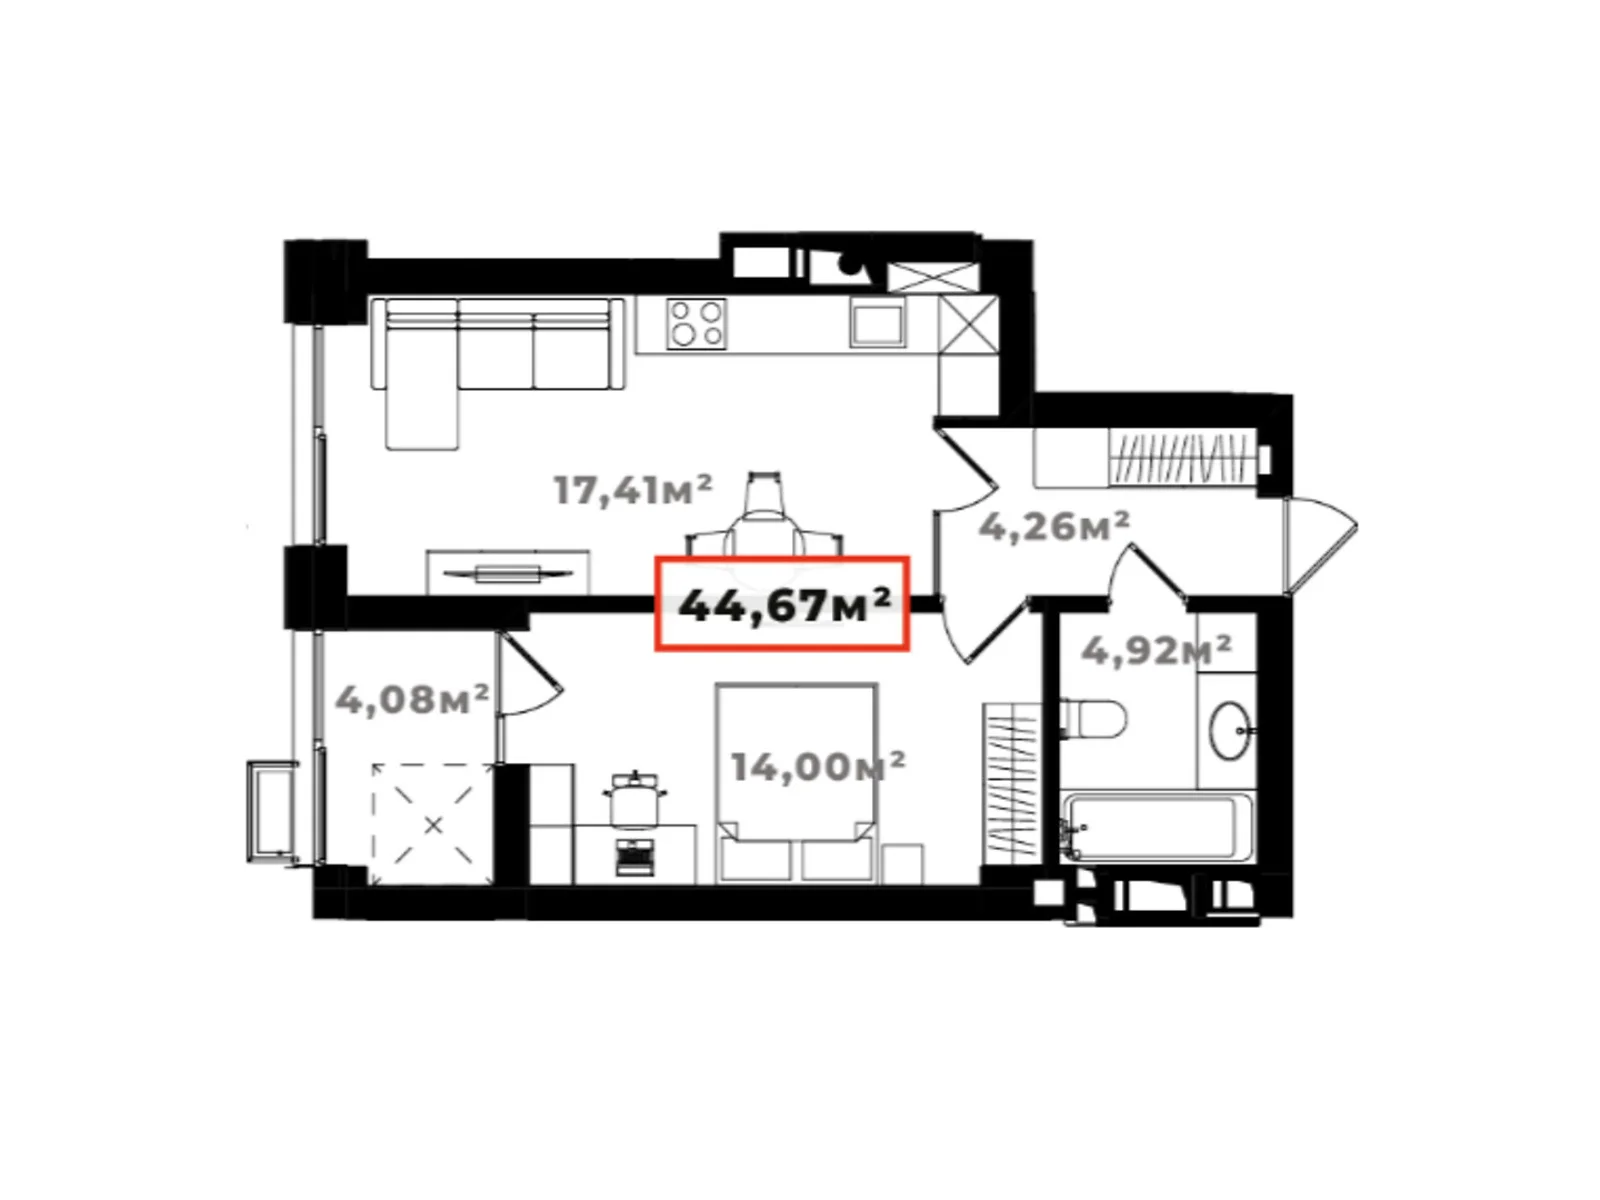 Продается 1-комнатная квартира 44.67 кв. м в Ивано-Франковске, ул. Солнечная, 25 - фото 1